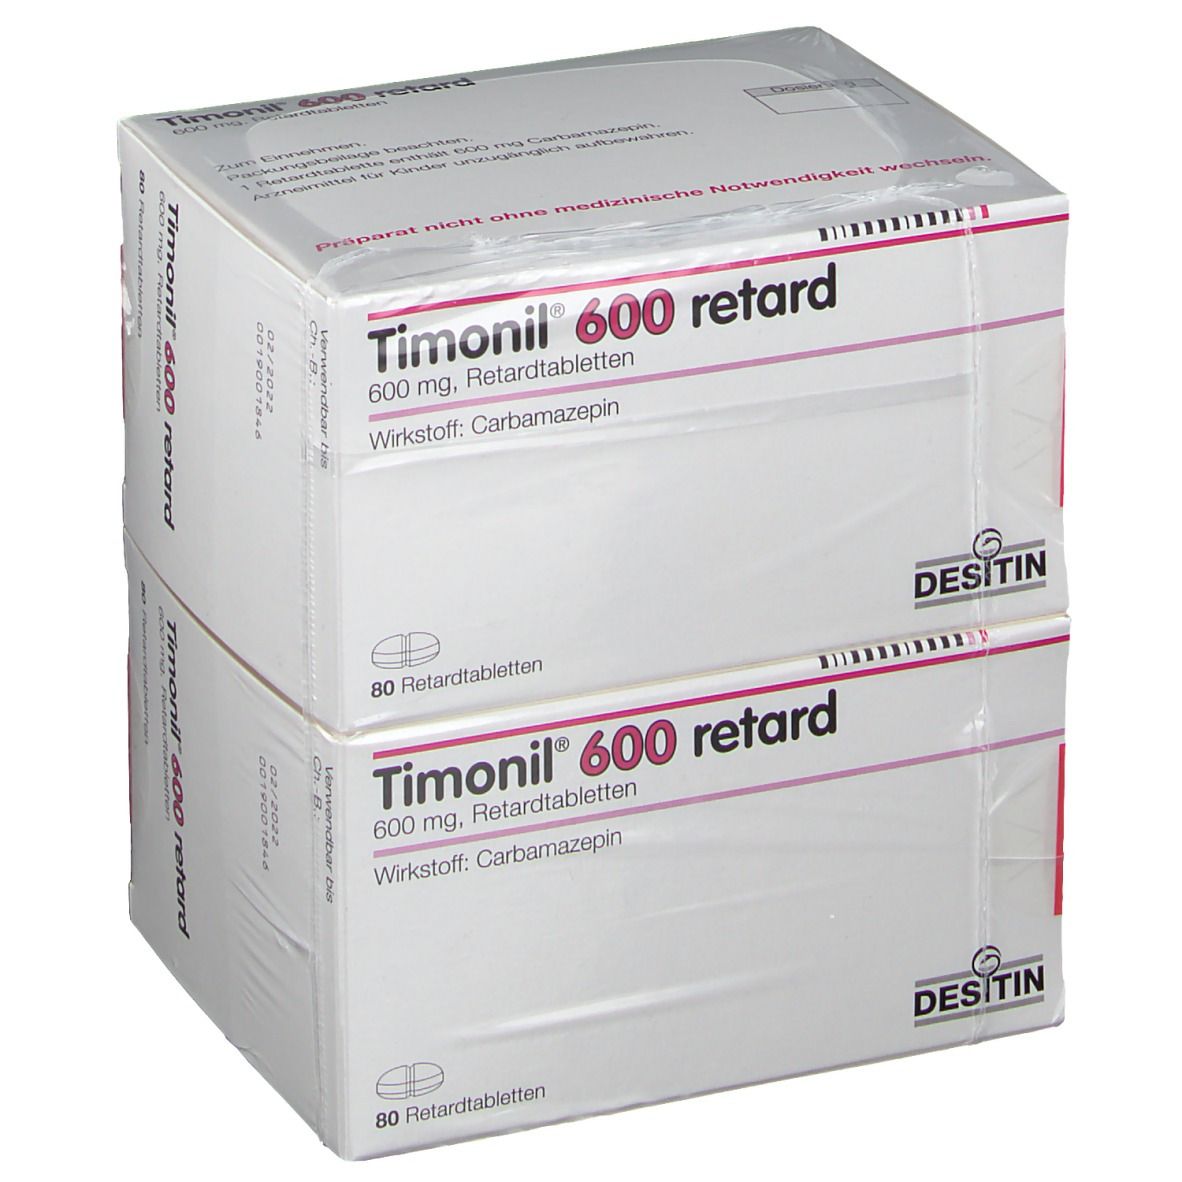 Timonil® 600 retard